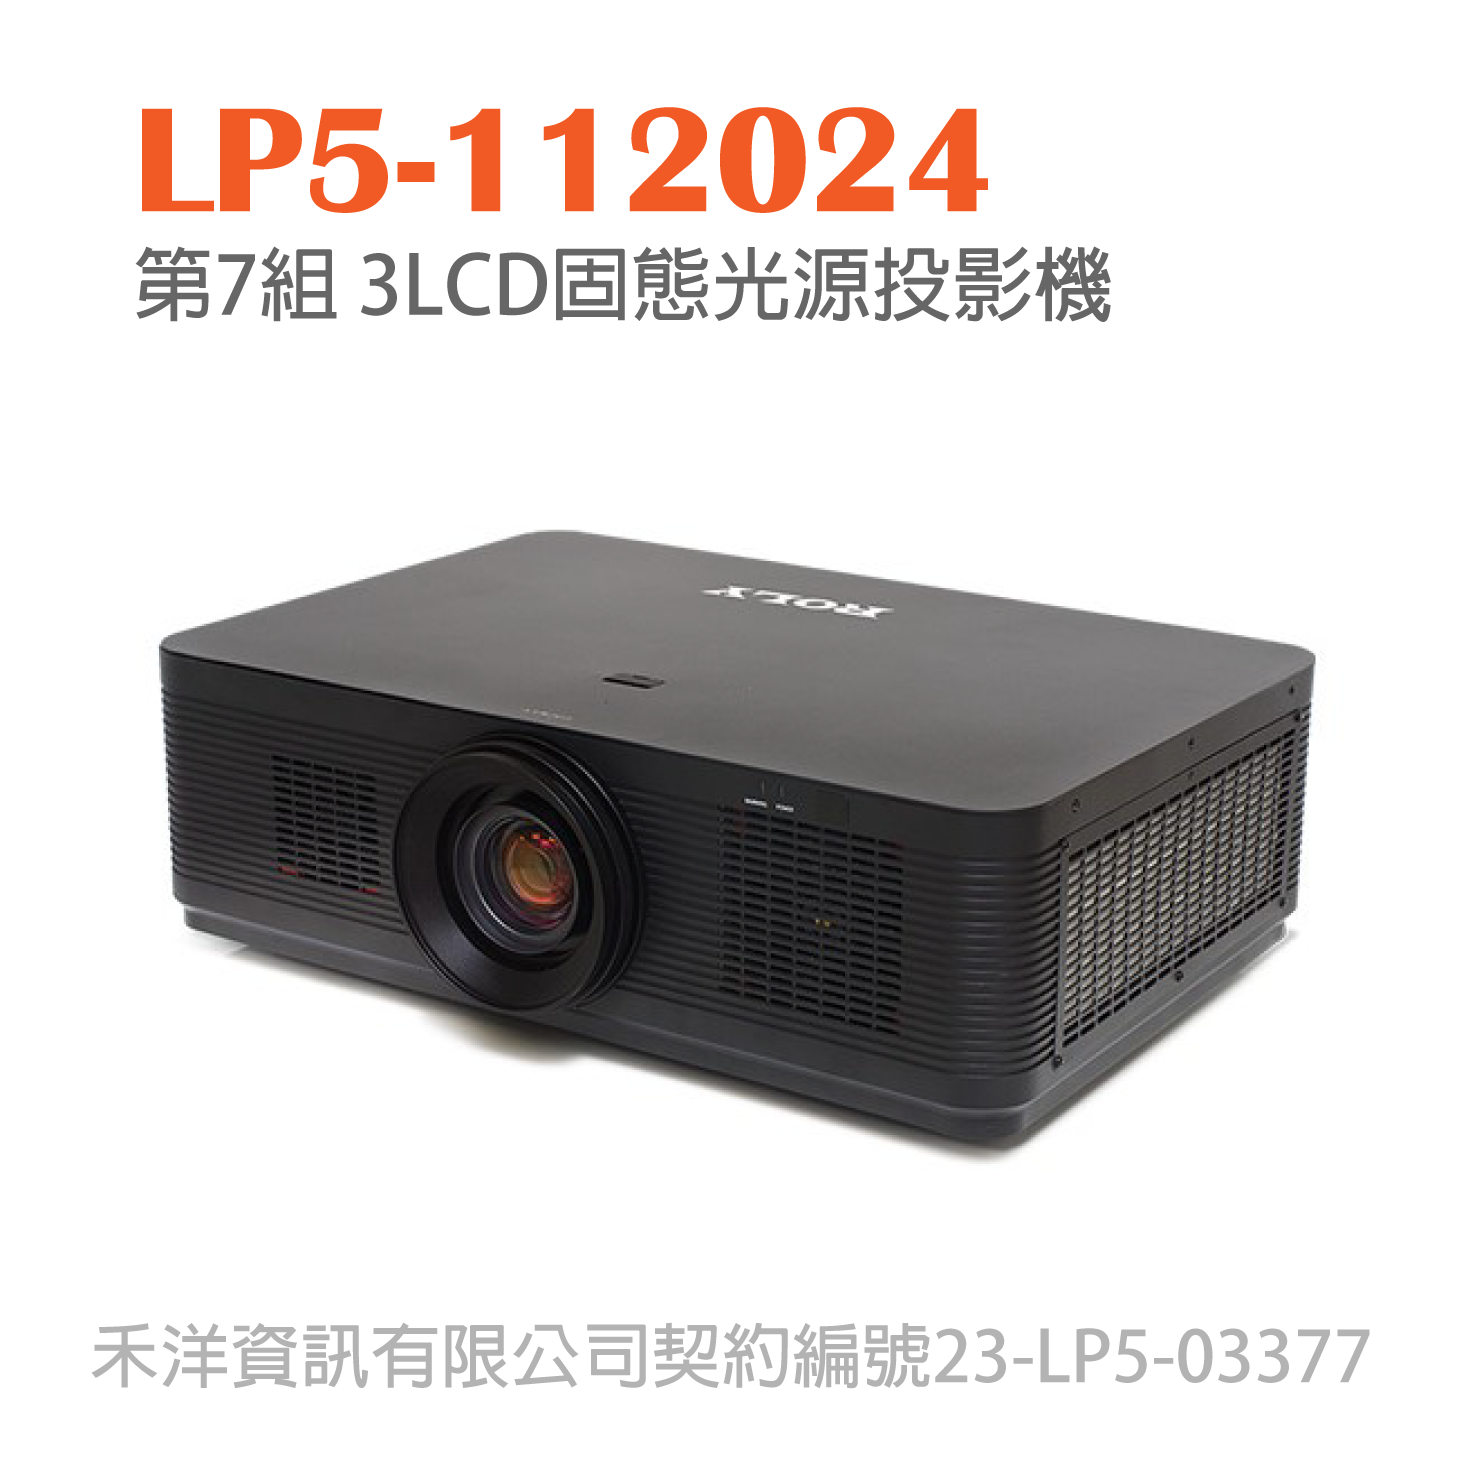 LP5-112024 台銀投影機標  第7組 3LCD固態光源投影機